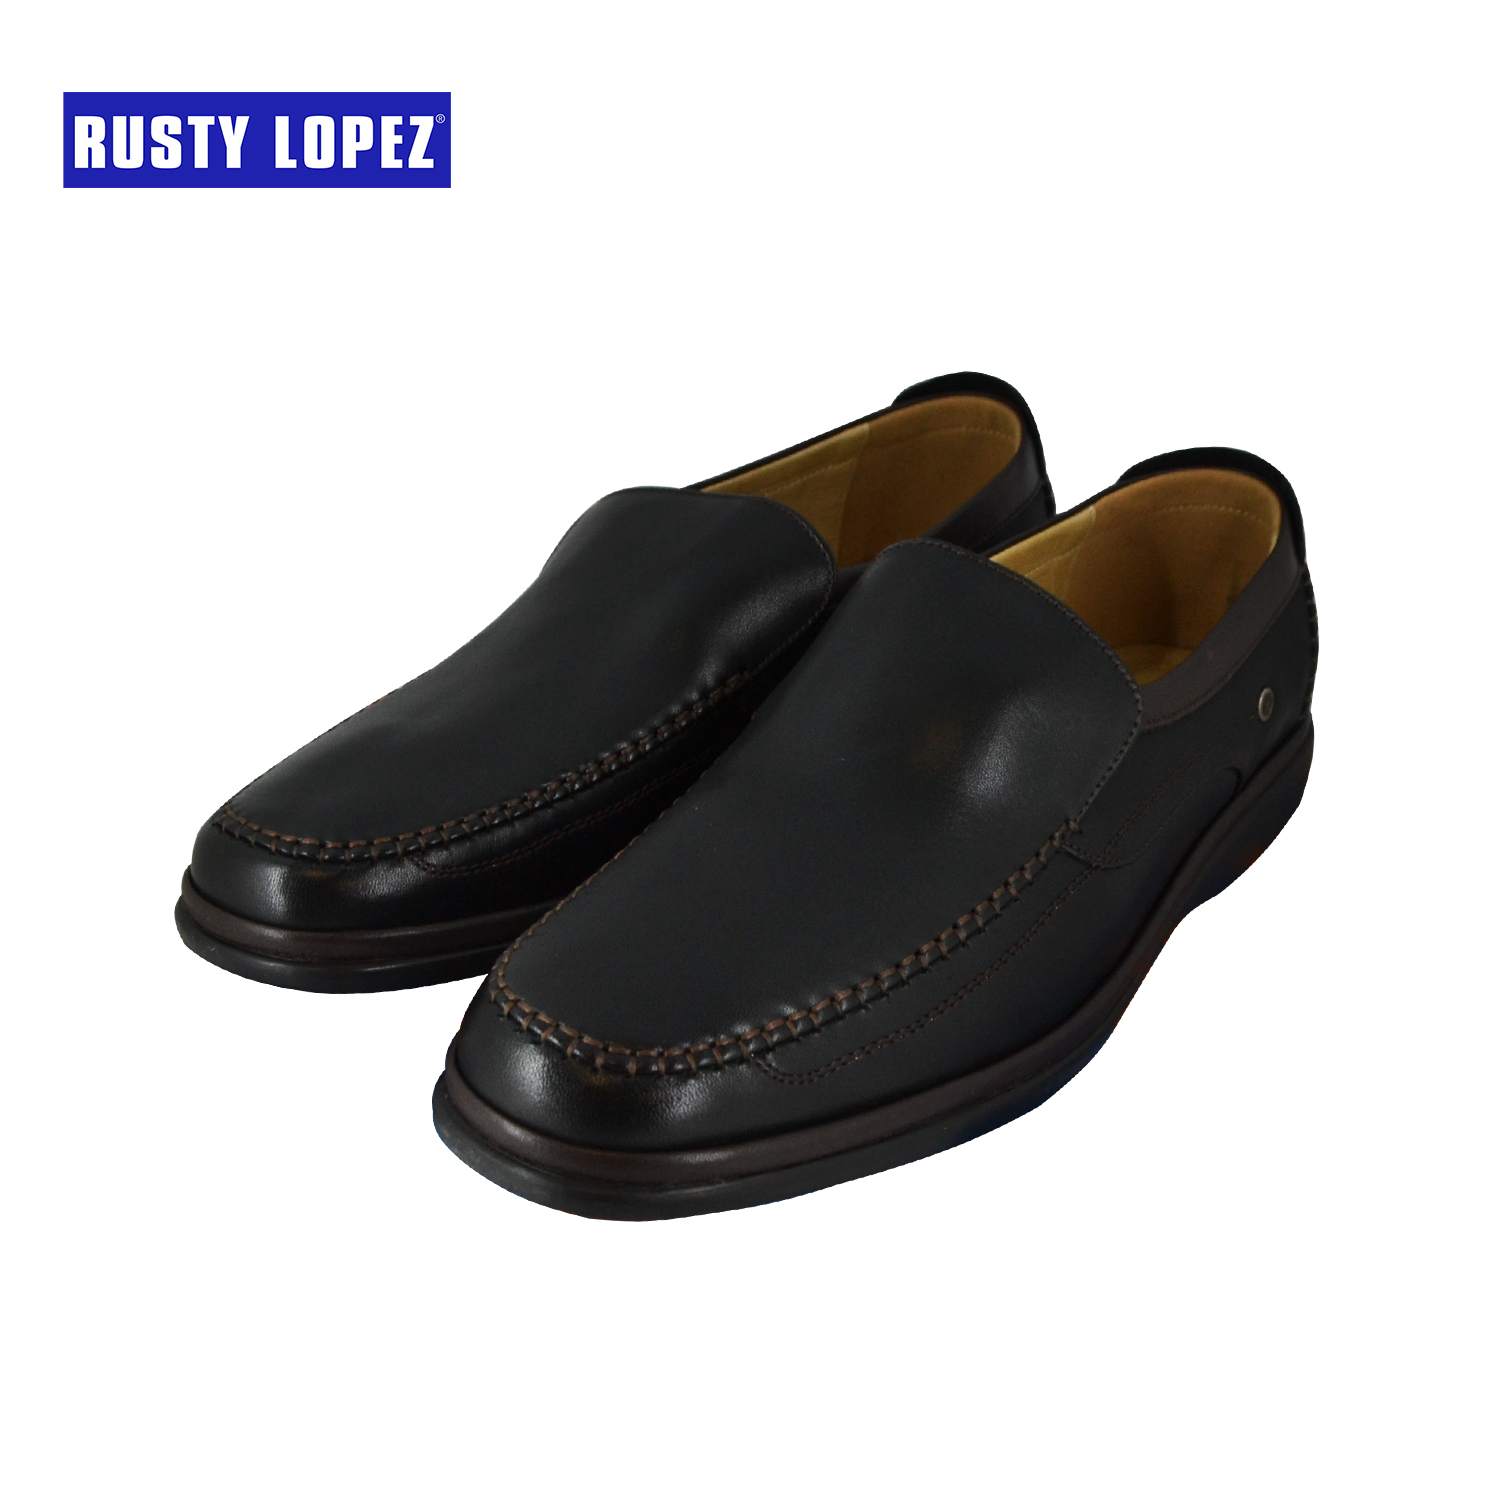 rusty lopez rubber shoes